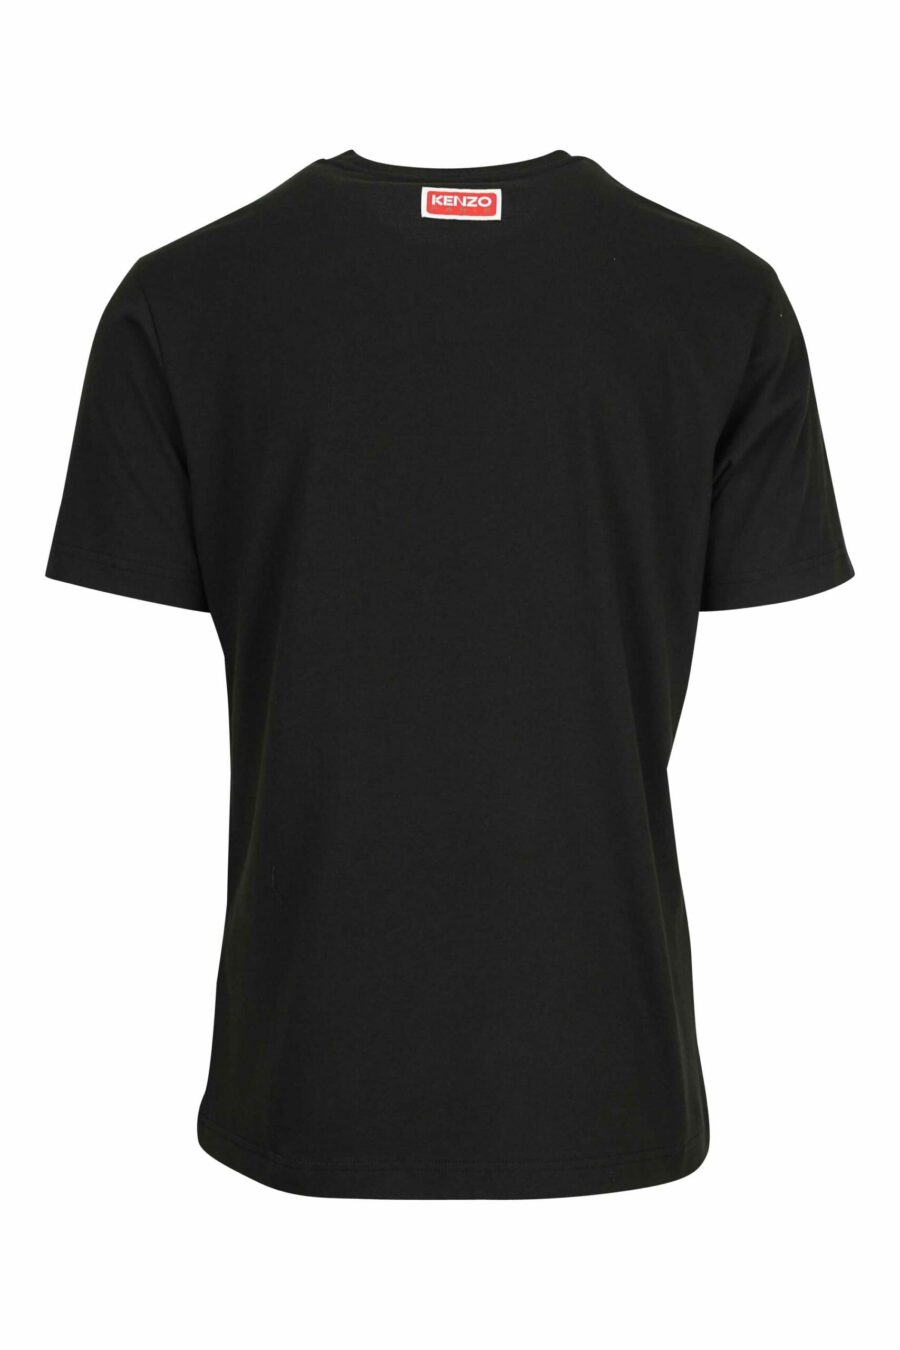 Camiseta negra con minilogo "kenzo elephant" - 3612230625365 1 scaled